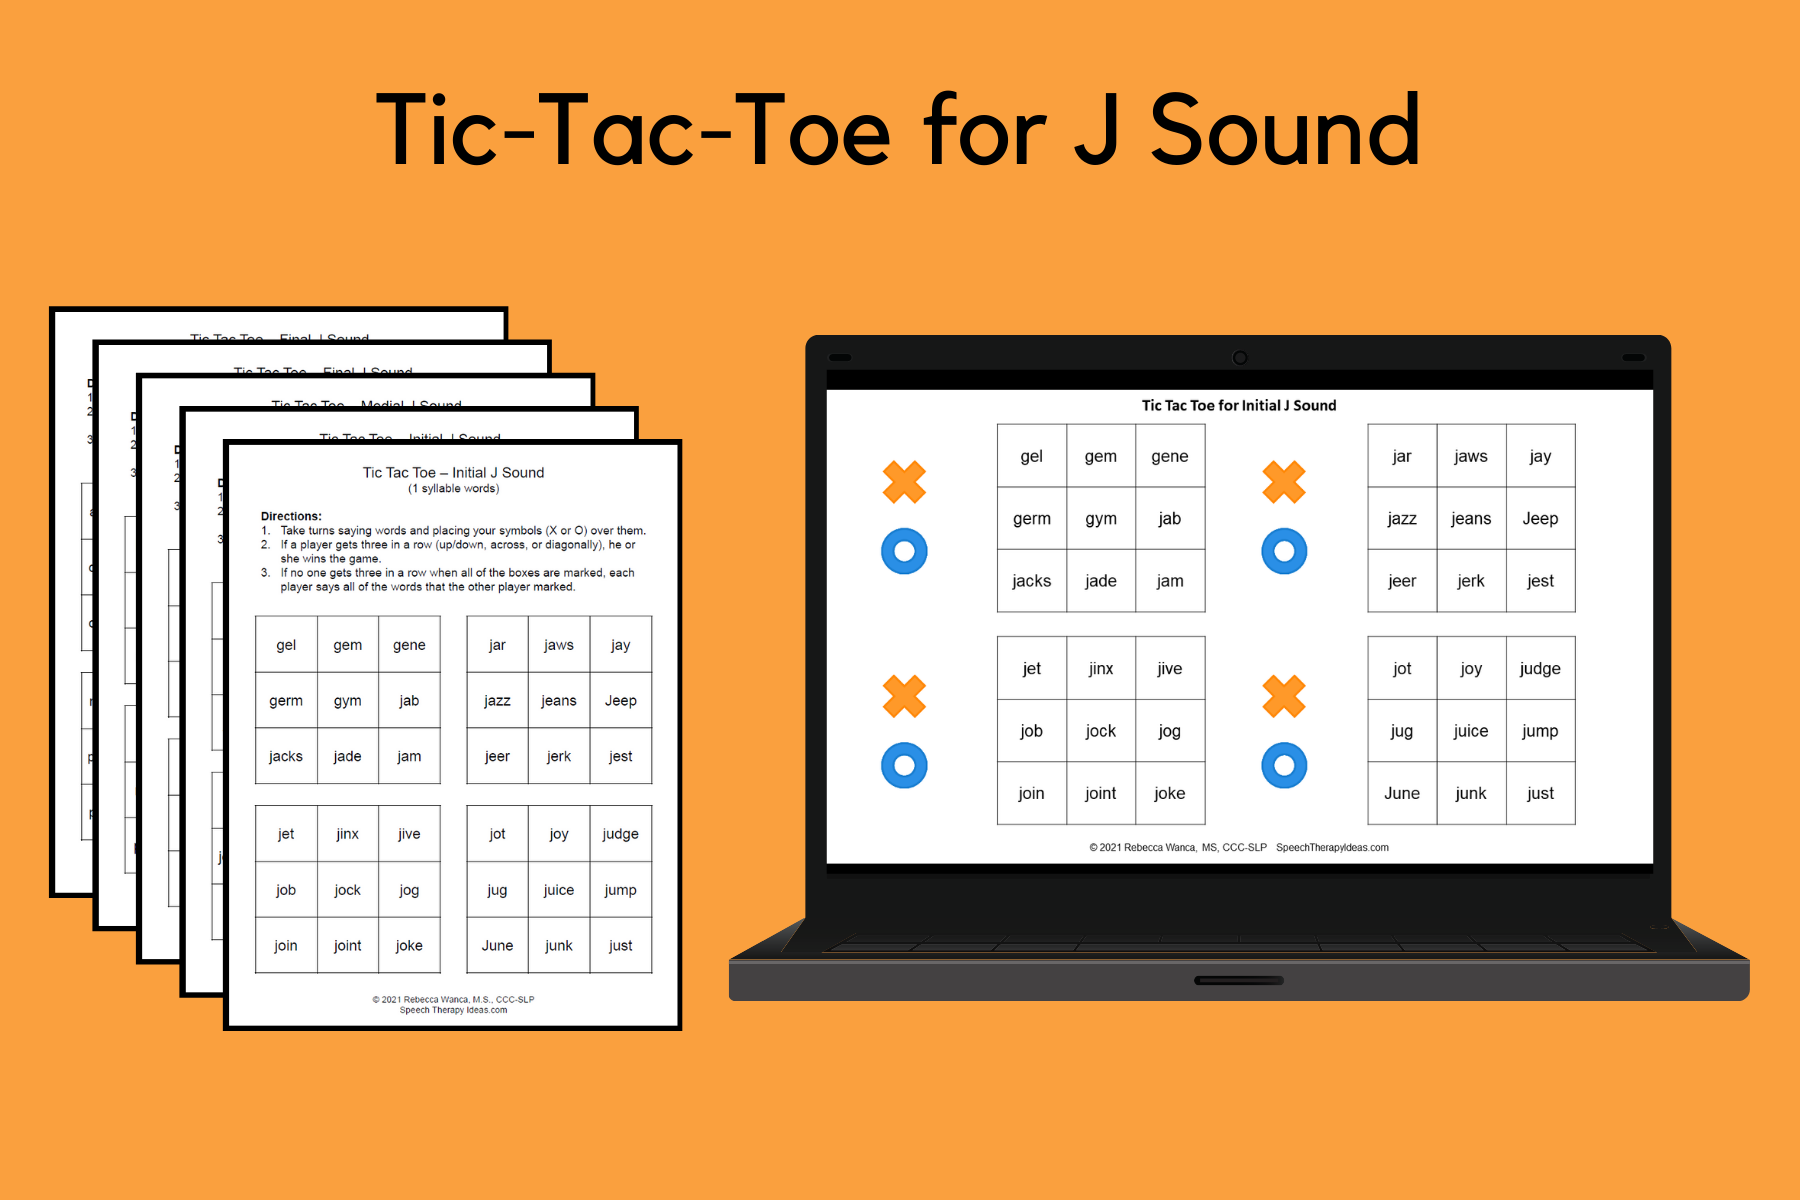 Tic-Tac-Toe Games for J Sound